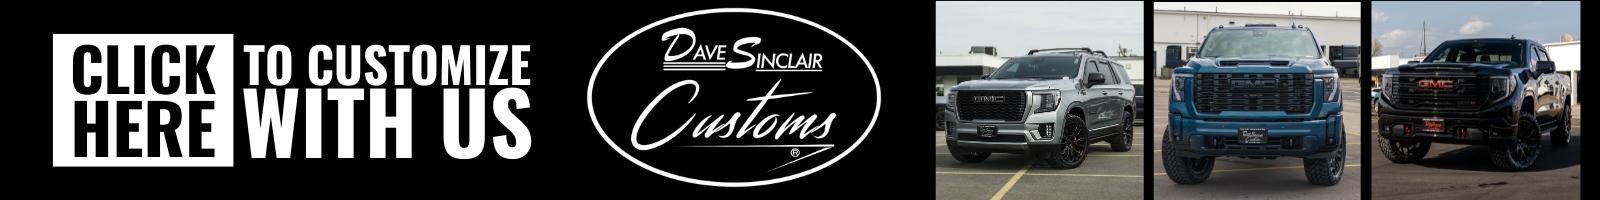 Dave Sinclair Customs